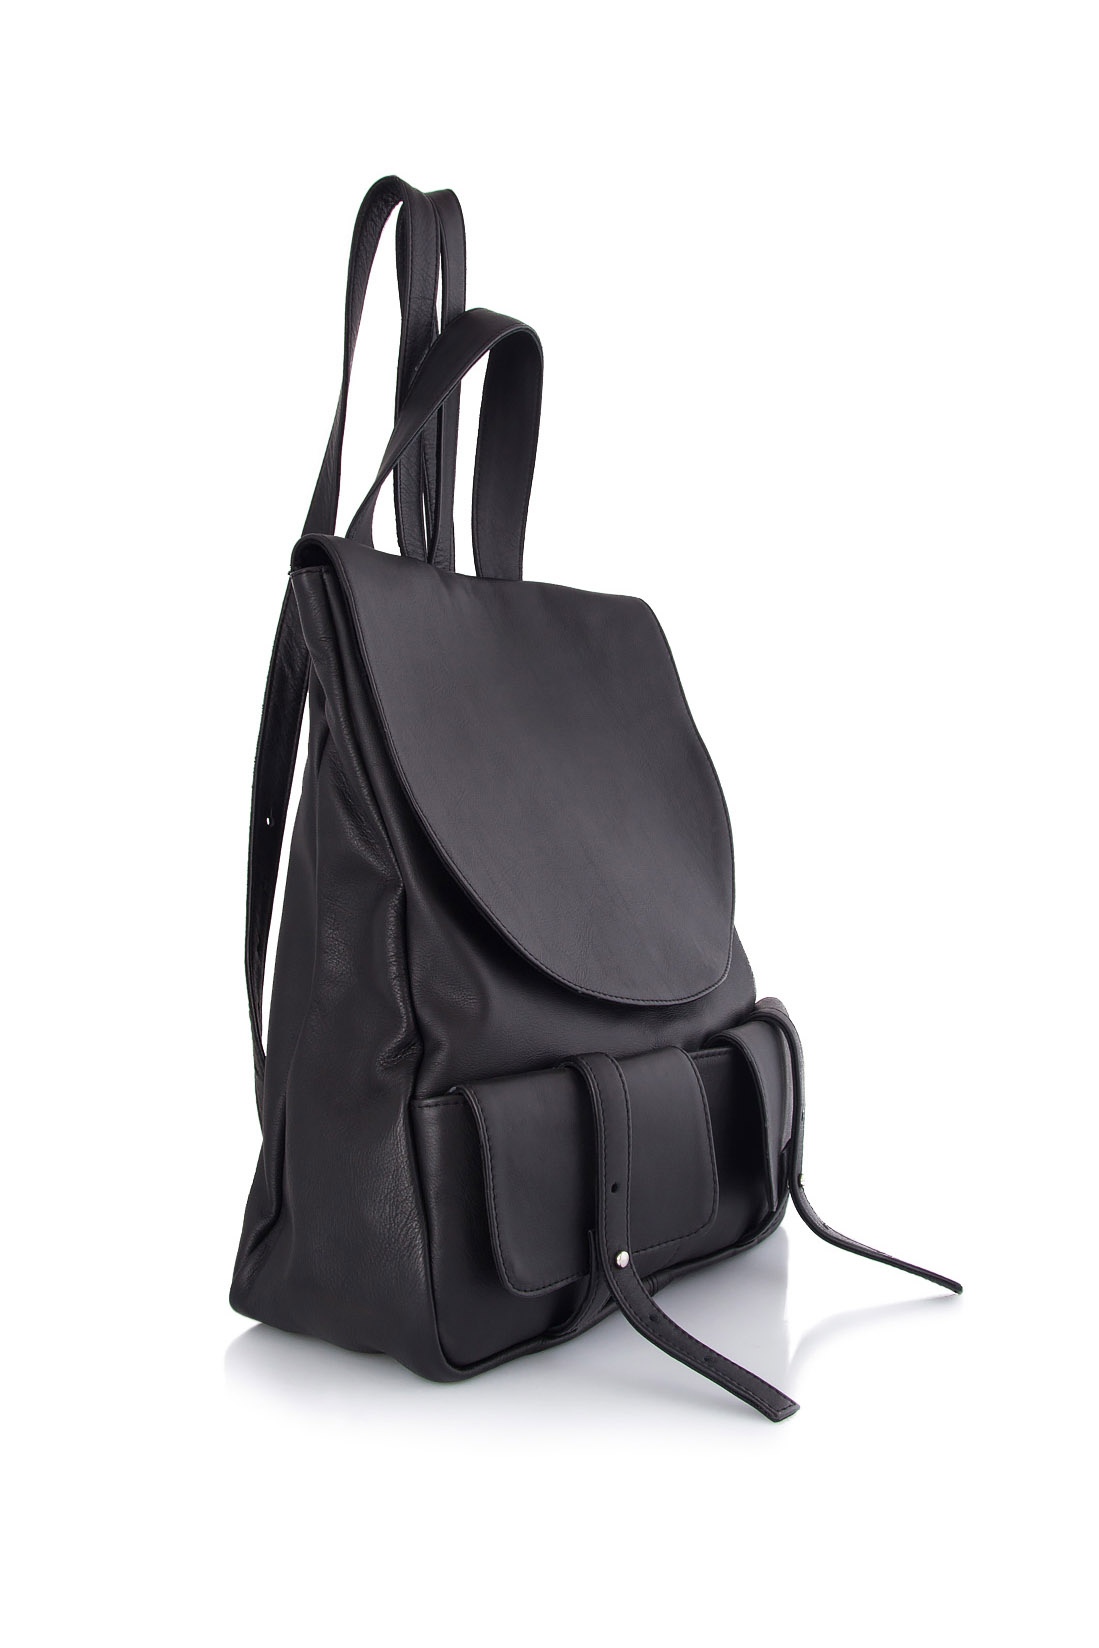 Black leather backpack Mihaela Glavan  image 1